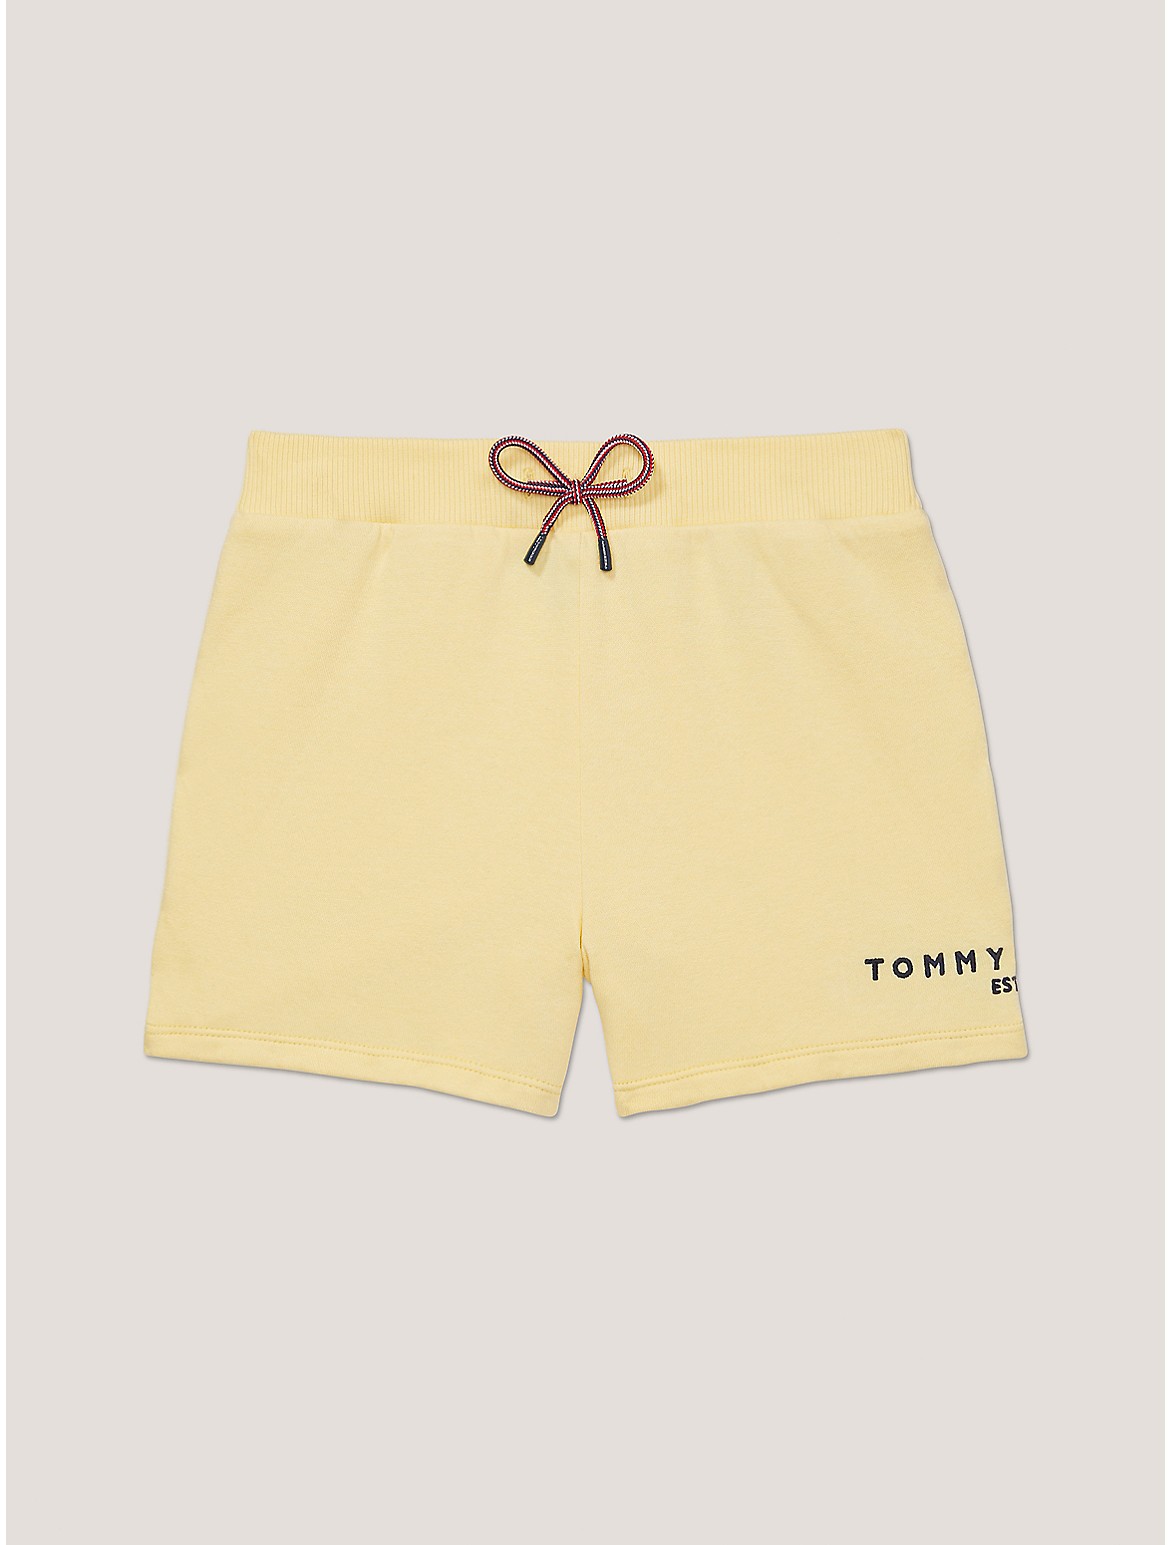 Tommy Hilfiger Girls' Kids' Knit Logo Sweatshort - Yellow - L